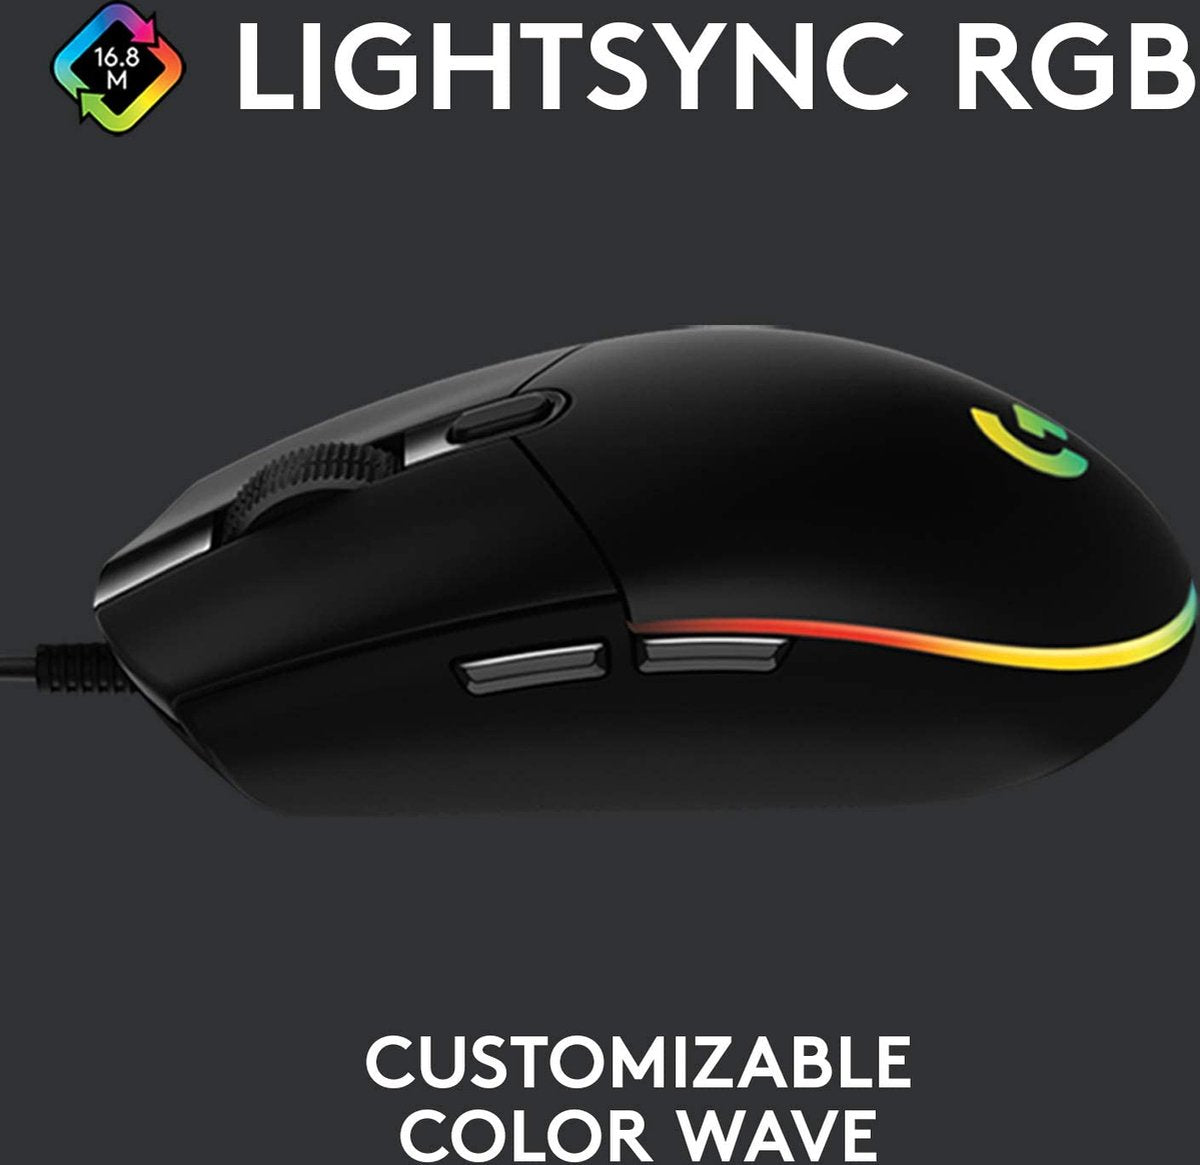 Logitech G102 LIGHTSYNC muis -  8000 DPI - Instelbare RGB - 6 buttons lay-out